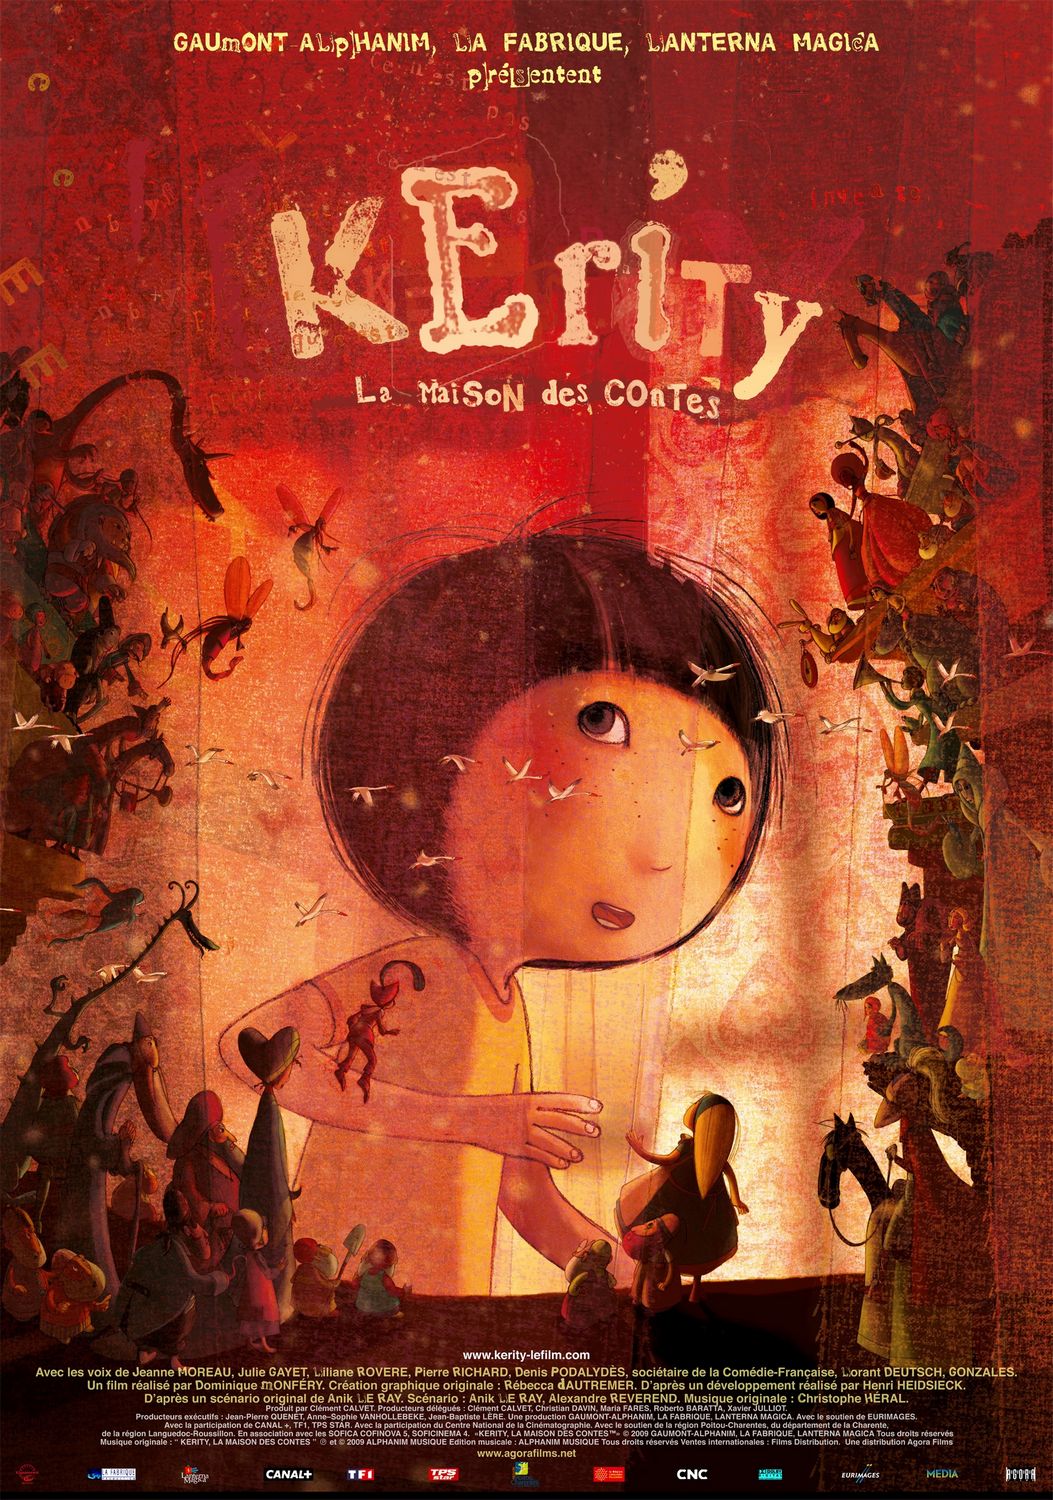 Extra Large Movie Poster Image for Kerity, la maison des contes 